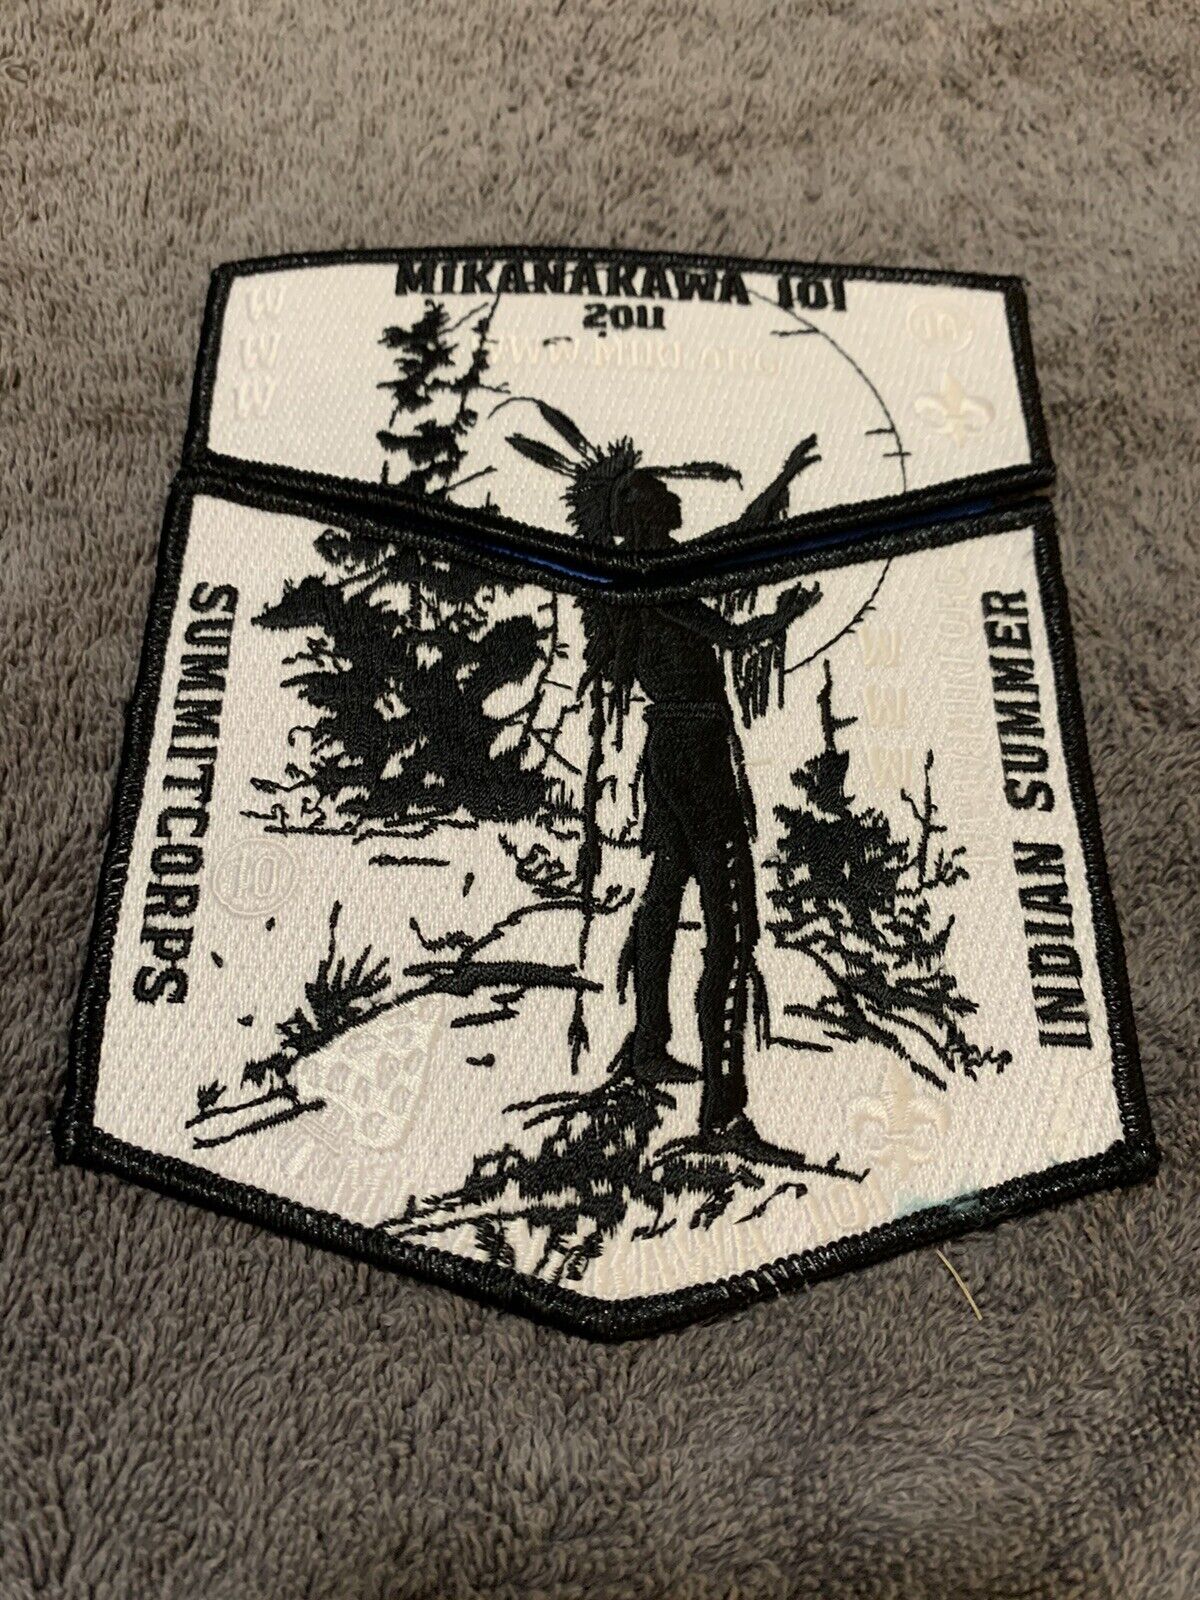 New Mikanakawa OA Lodge 101 Boy Scout Summitcorps/Indian Summer Flap & Patch BSA